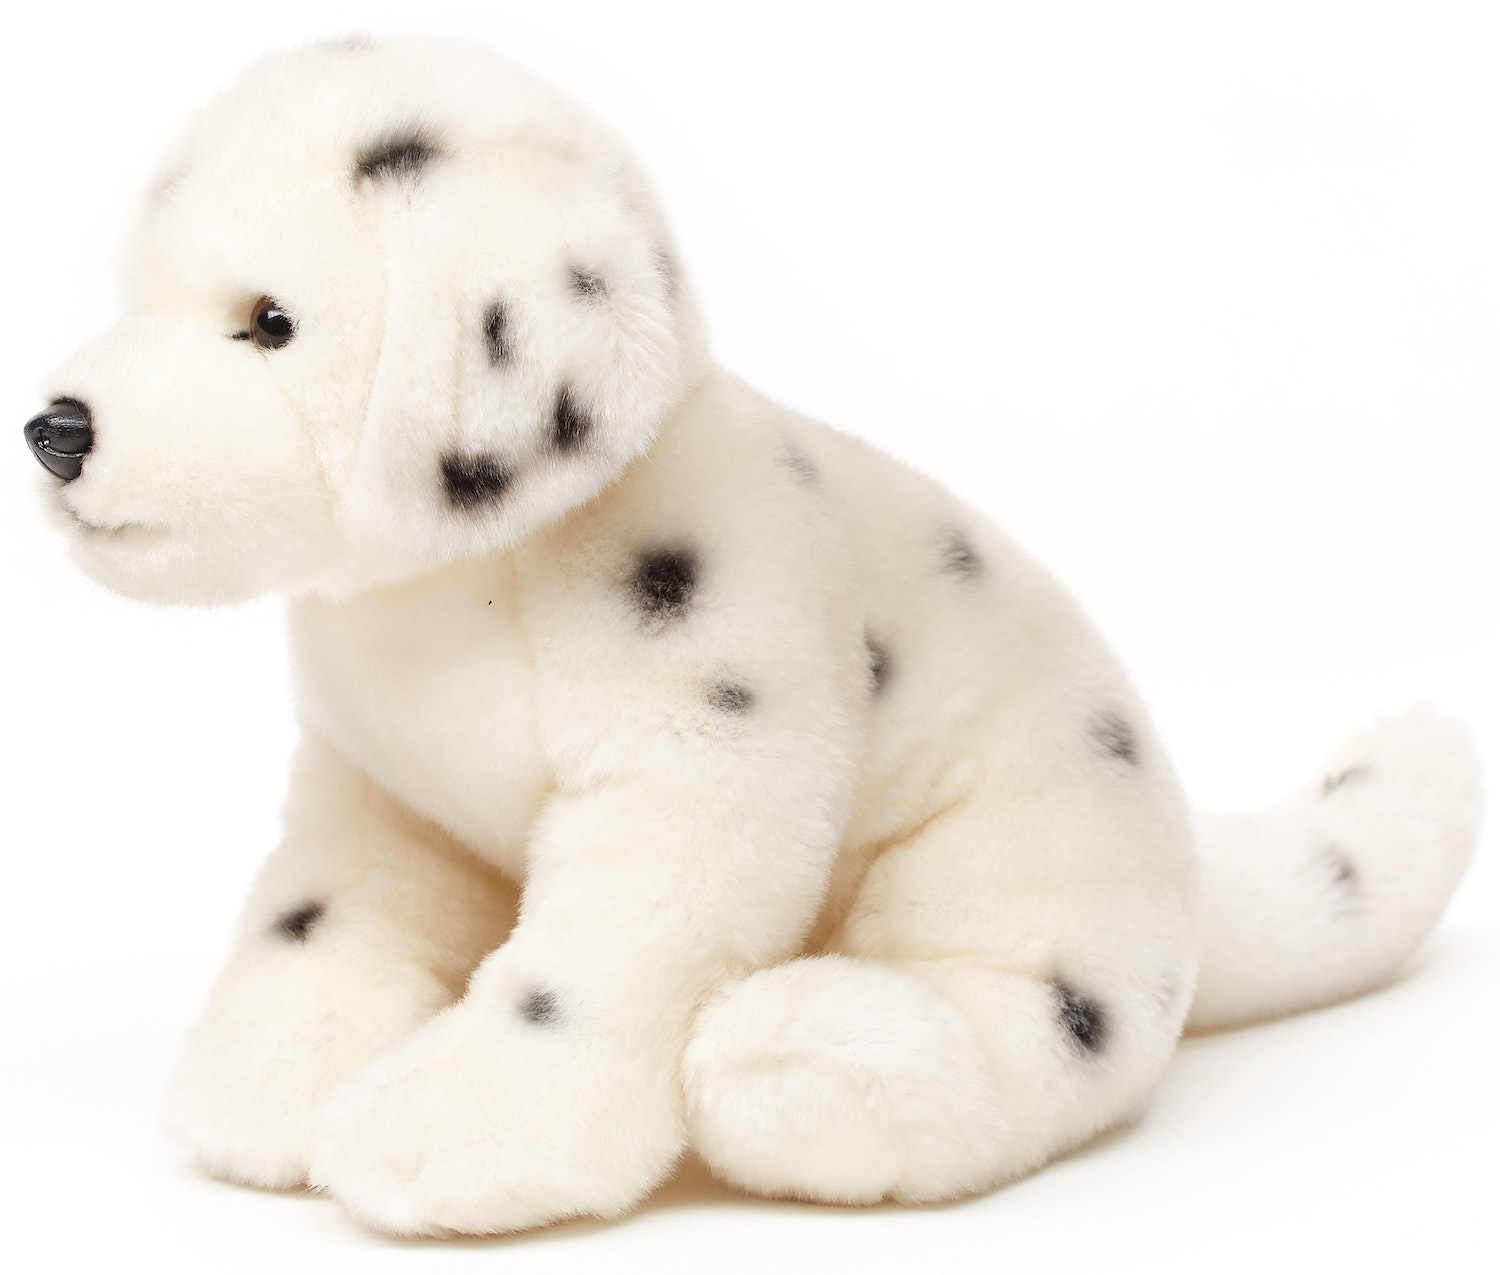 Dalmatian, Sitting - 25 cm (height) - Plush Dog, Pet - Soft Toy, Cuddly Toy.